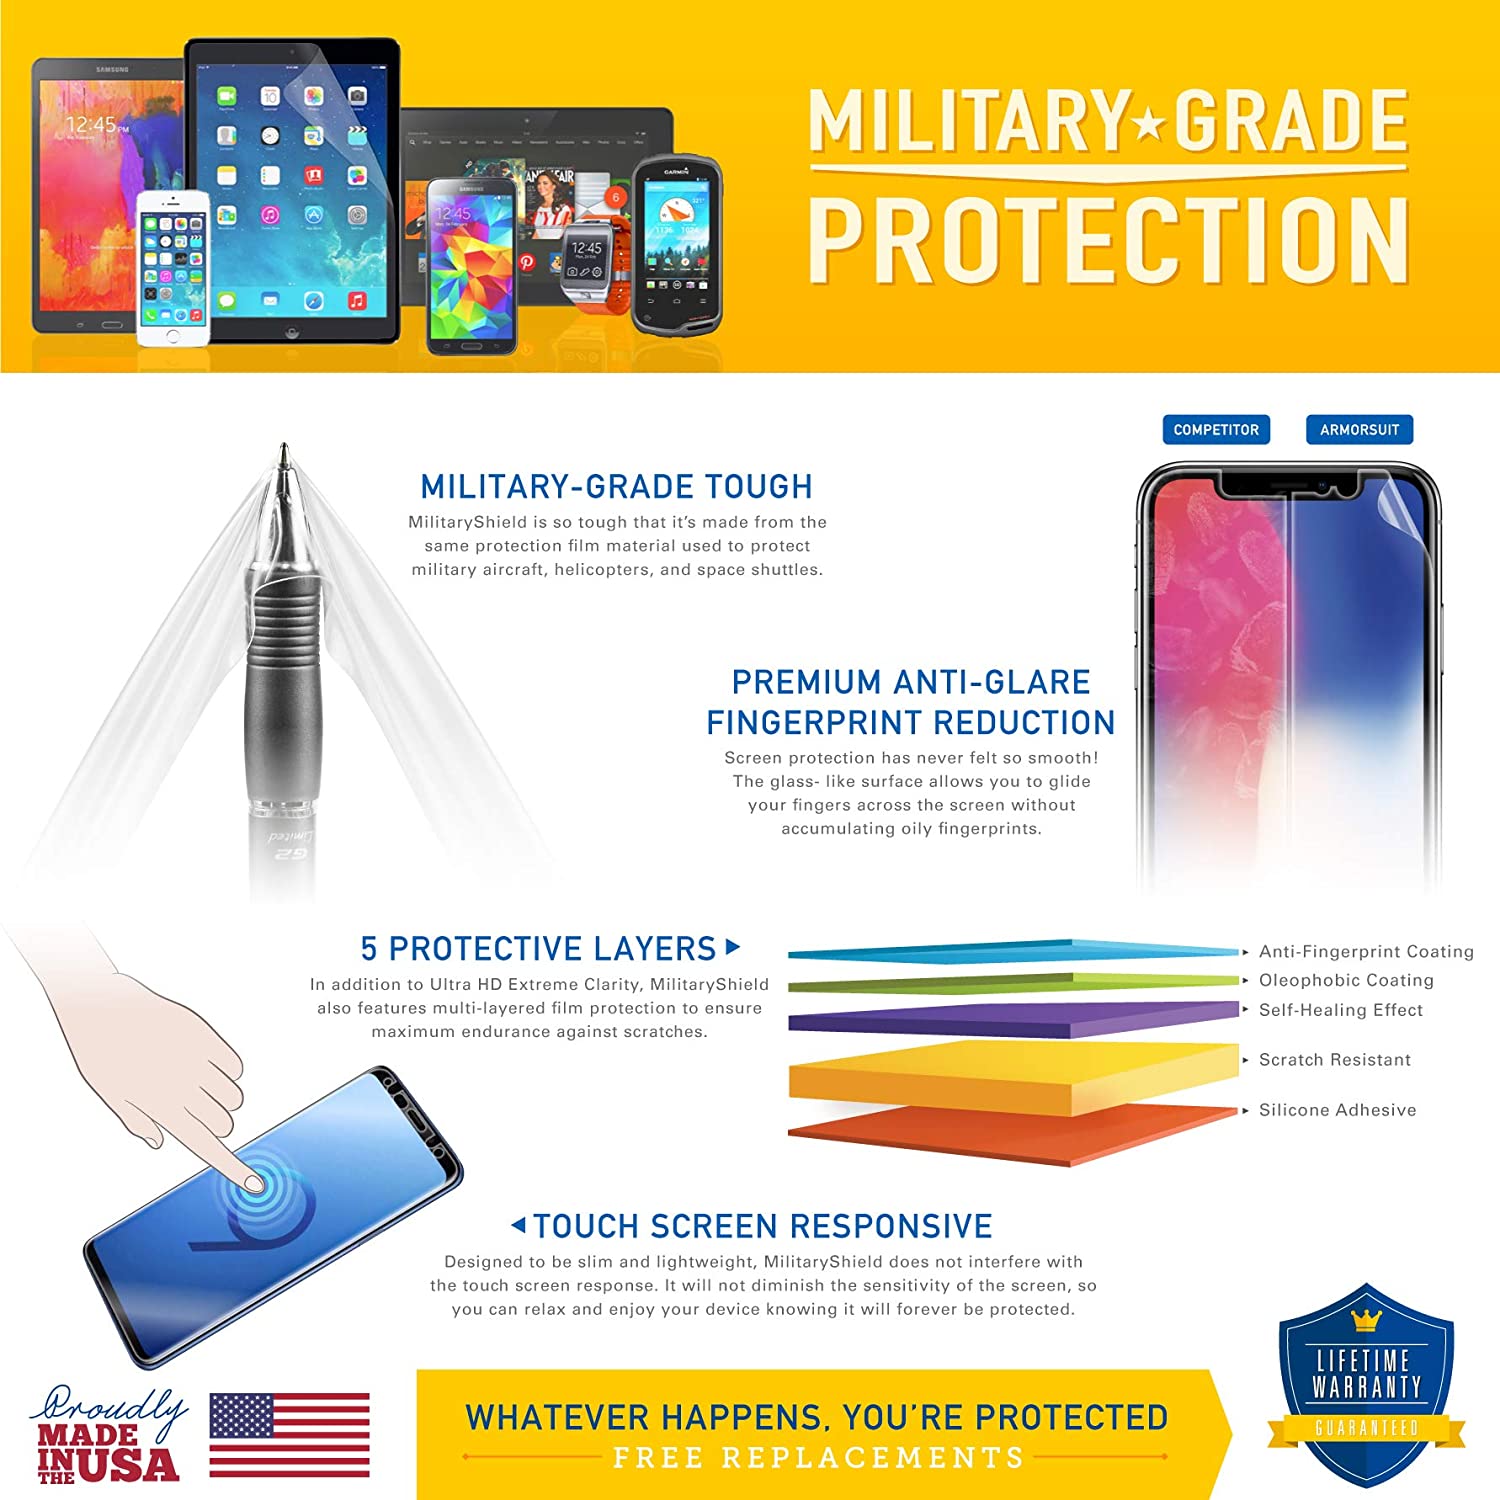 [2-Pack] LG Nexus 4 Screen Protector